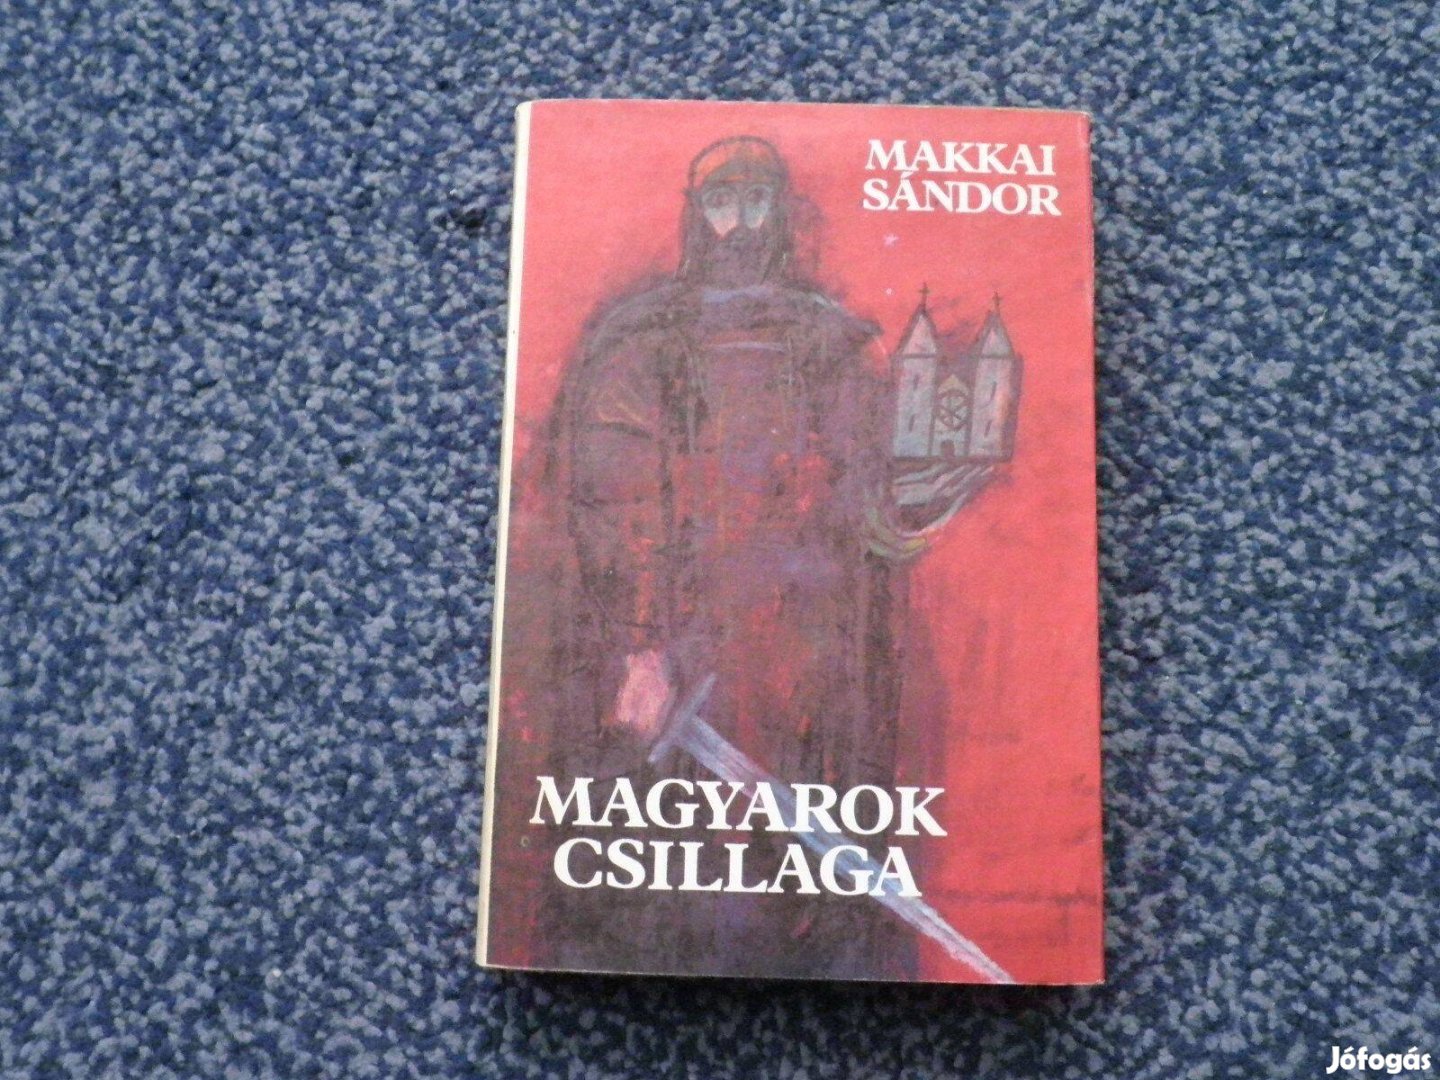 Makkai Sándor - Magyarok csillaga